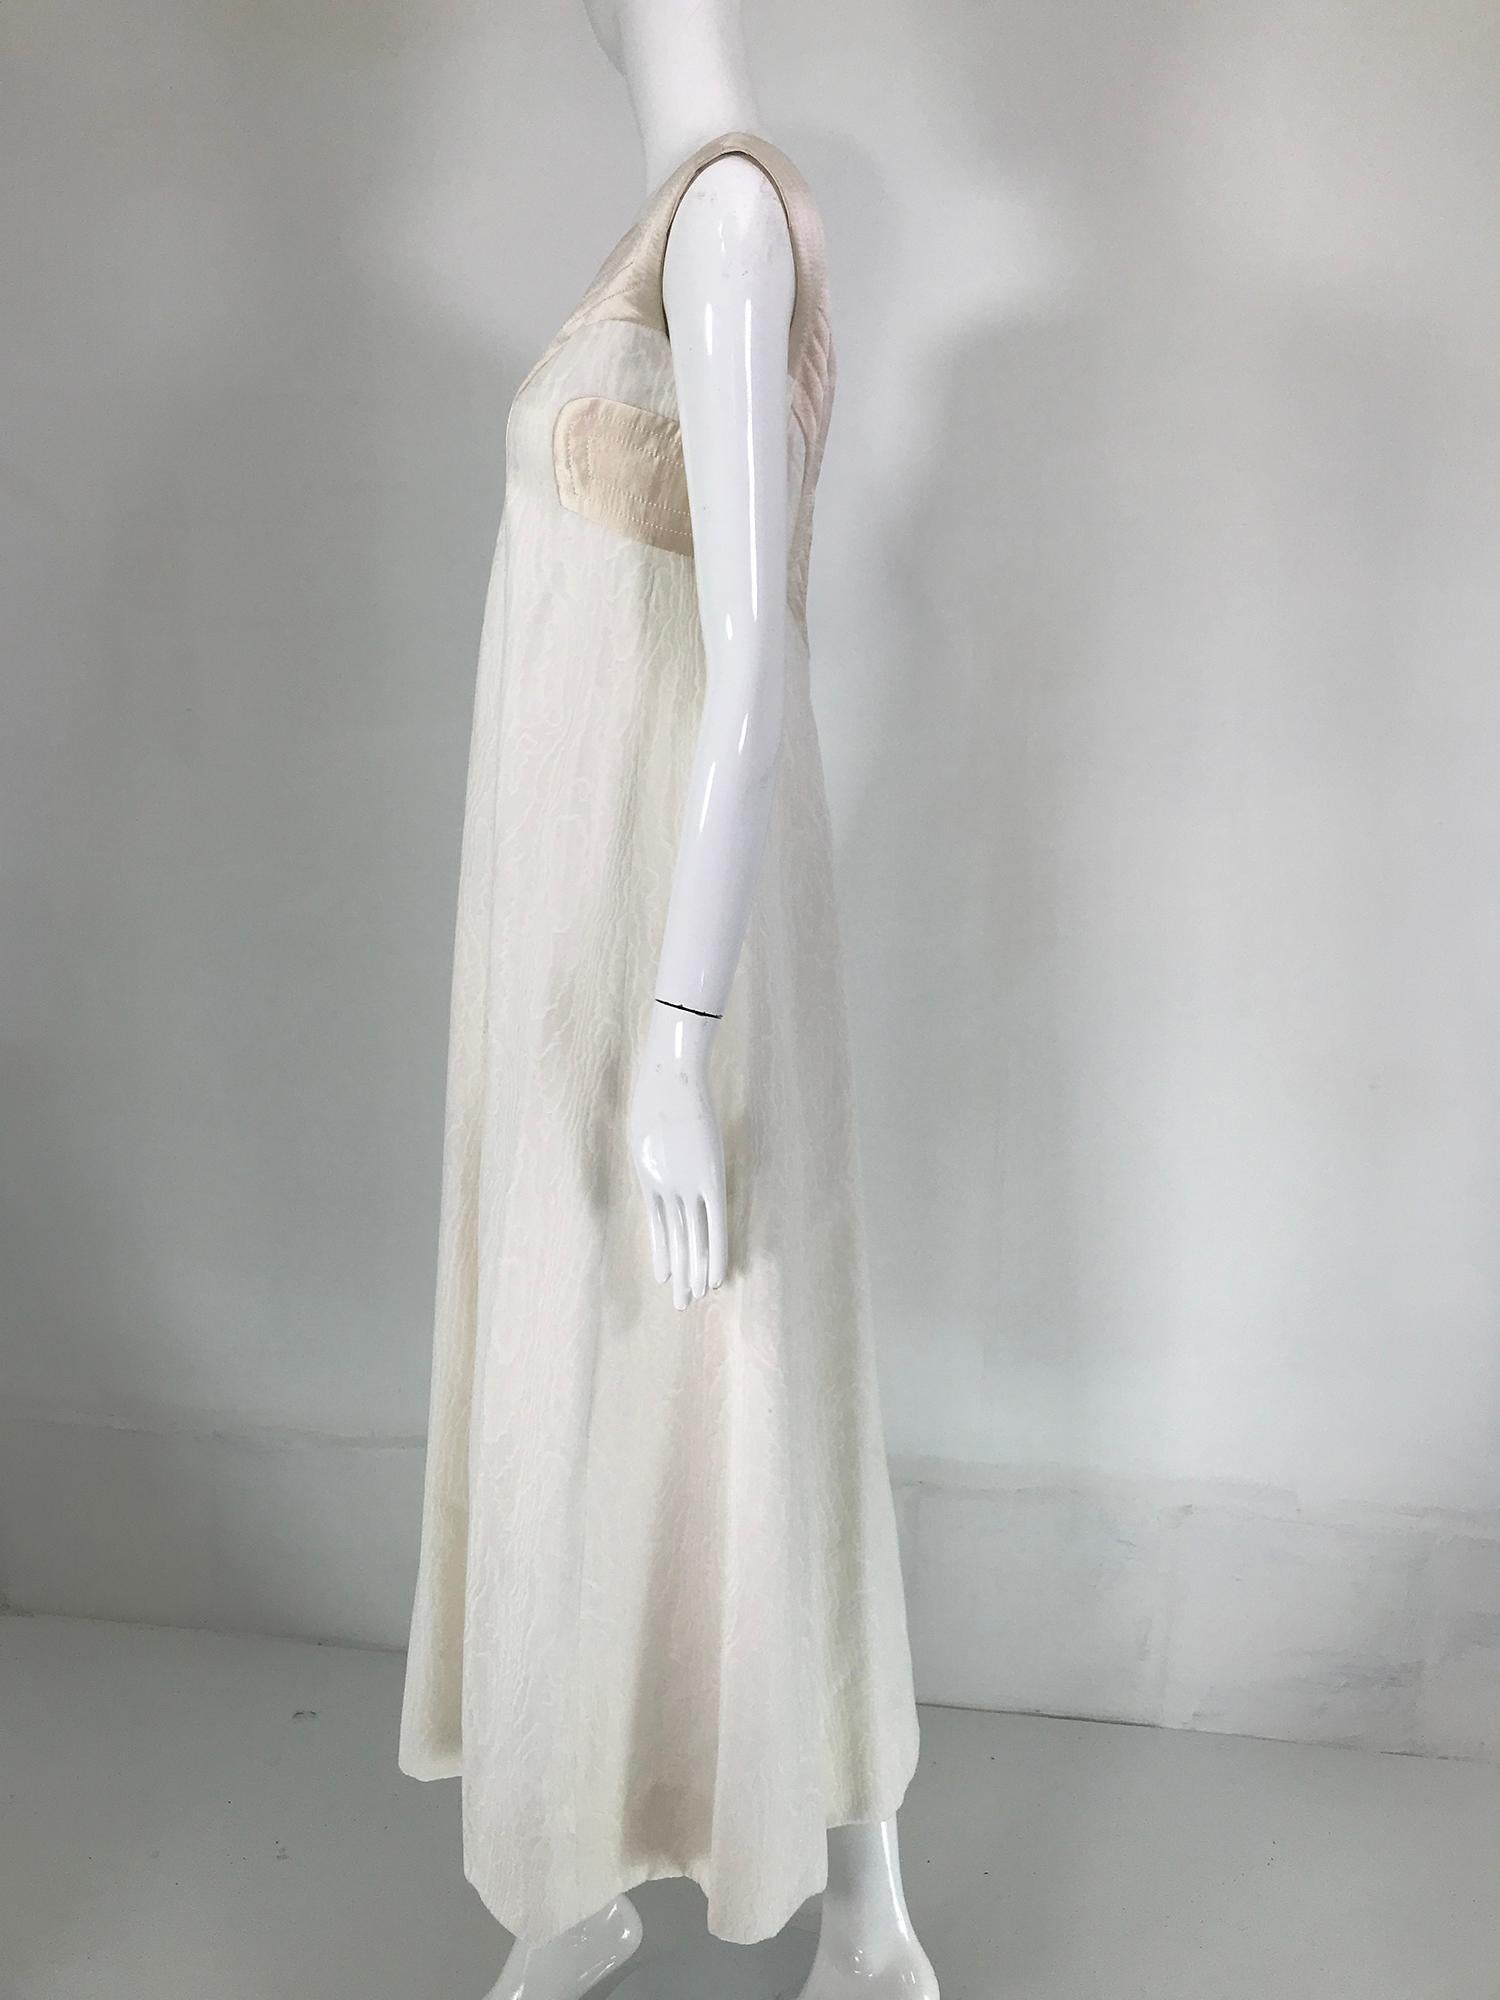 Ronald Amey Rare Evening Coat & Evening Dress in Devore Velvet & Satin 1970s For Sale 8